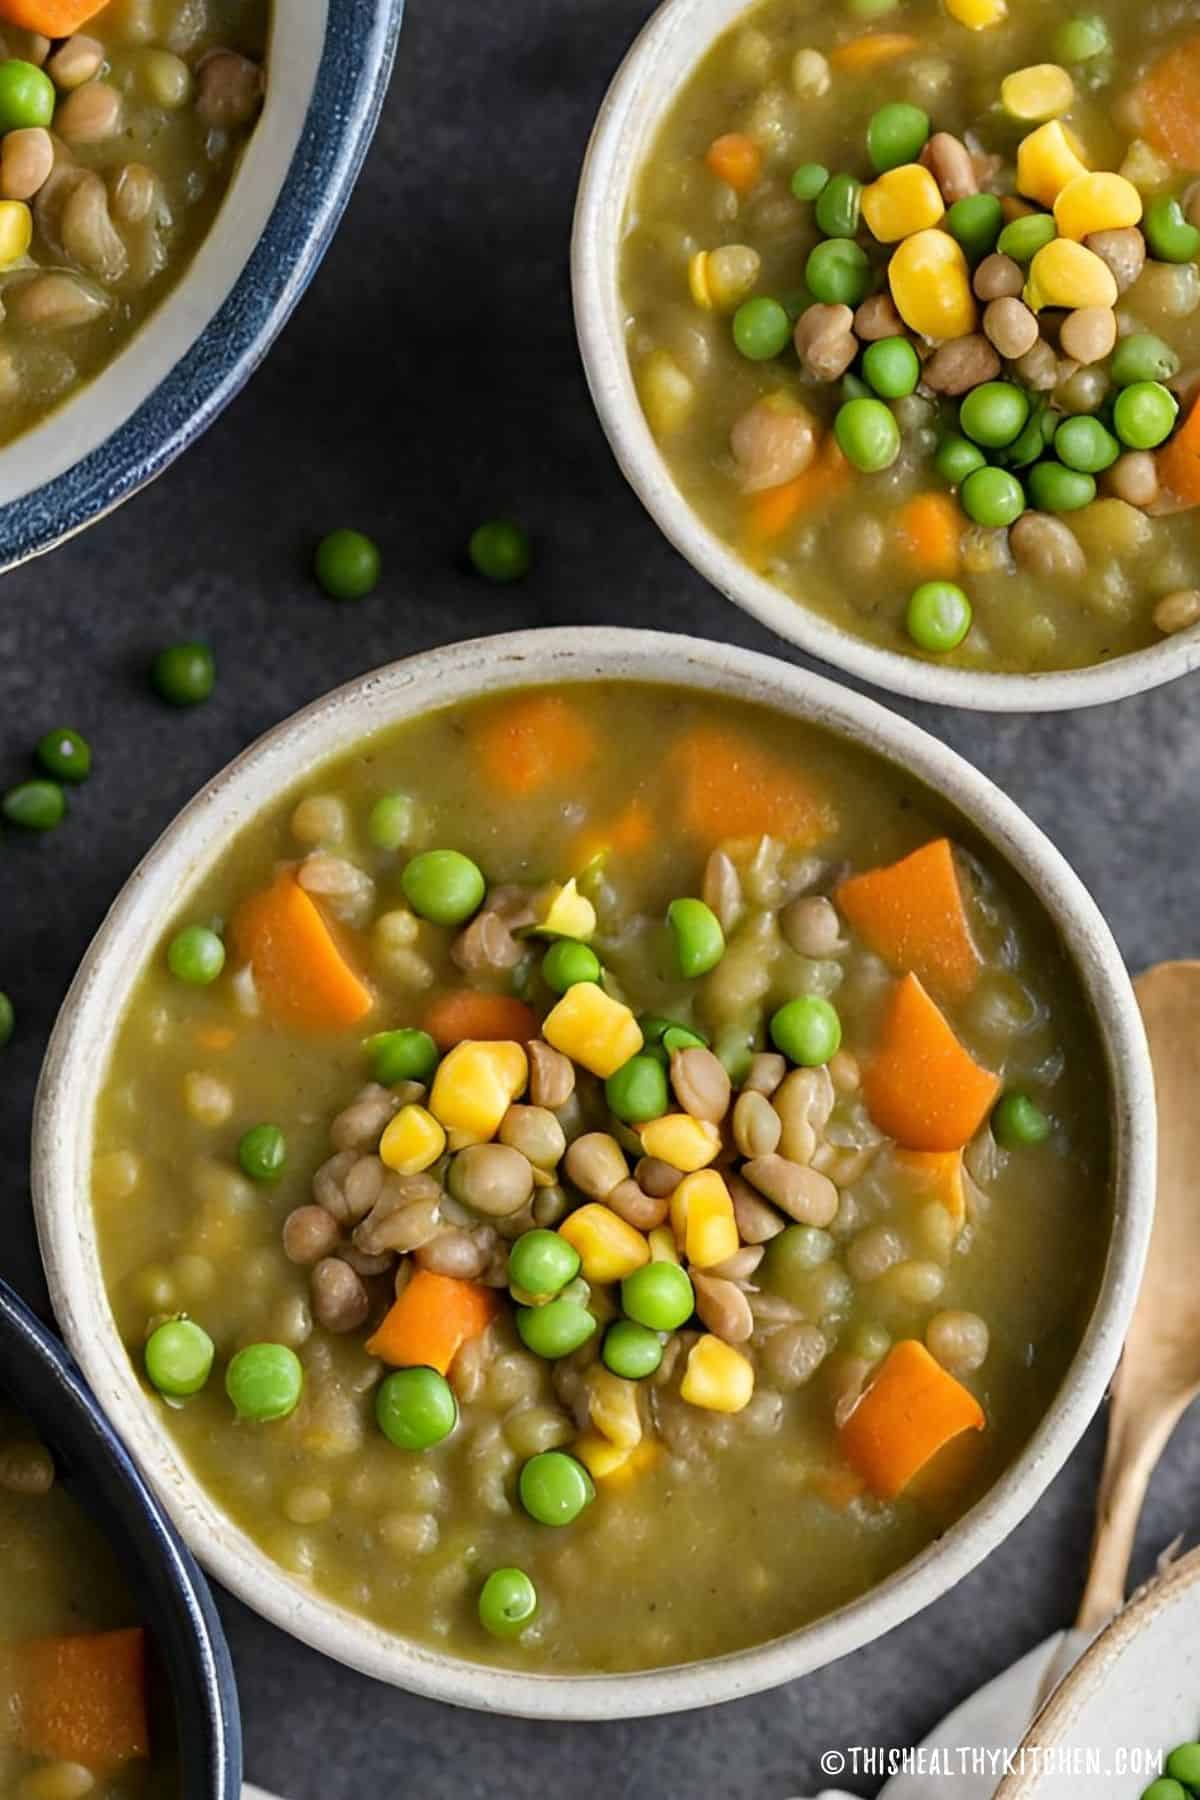 Large bowl of lentil and vegetable soup.